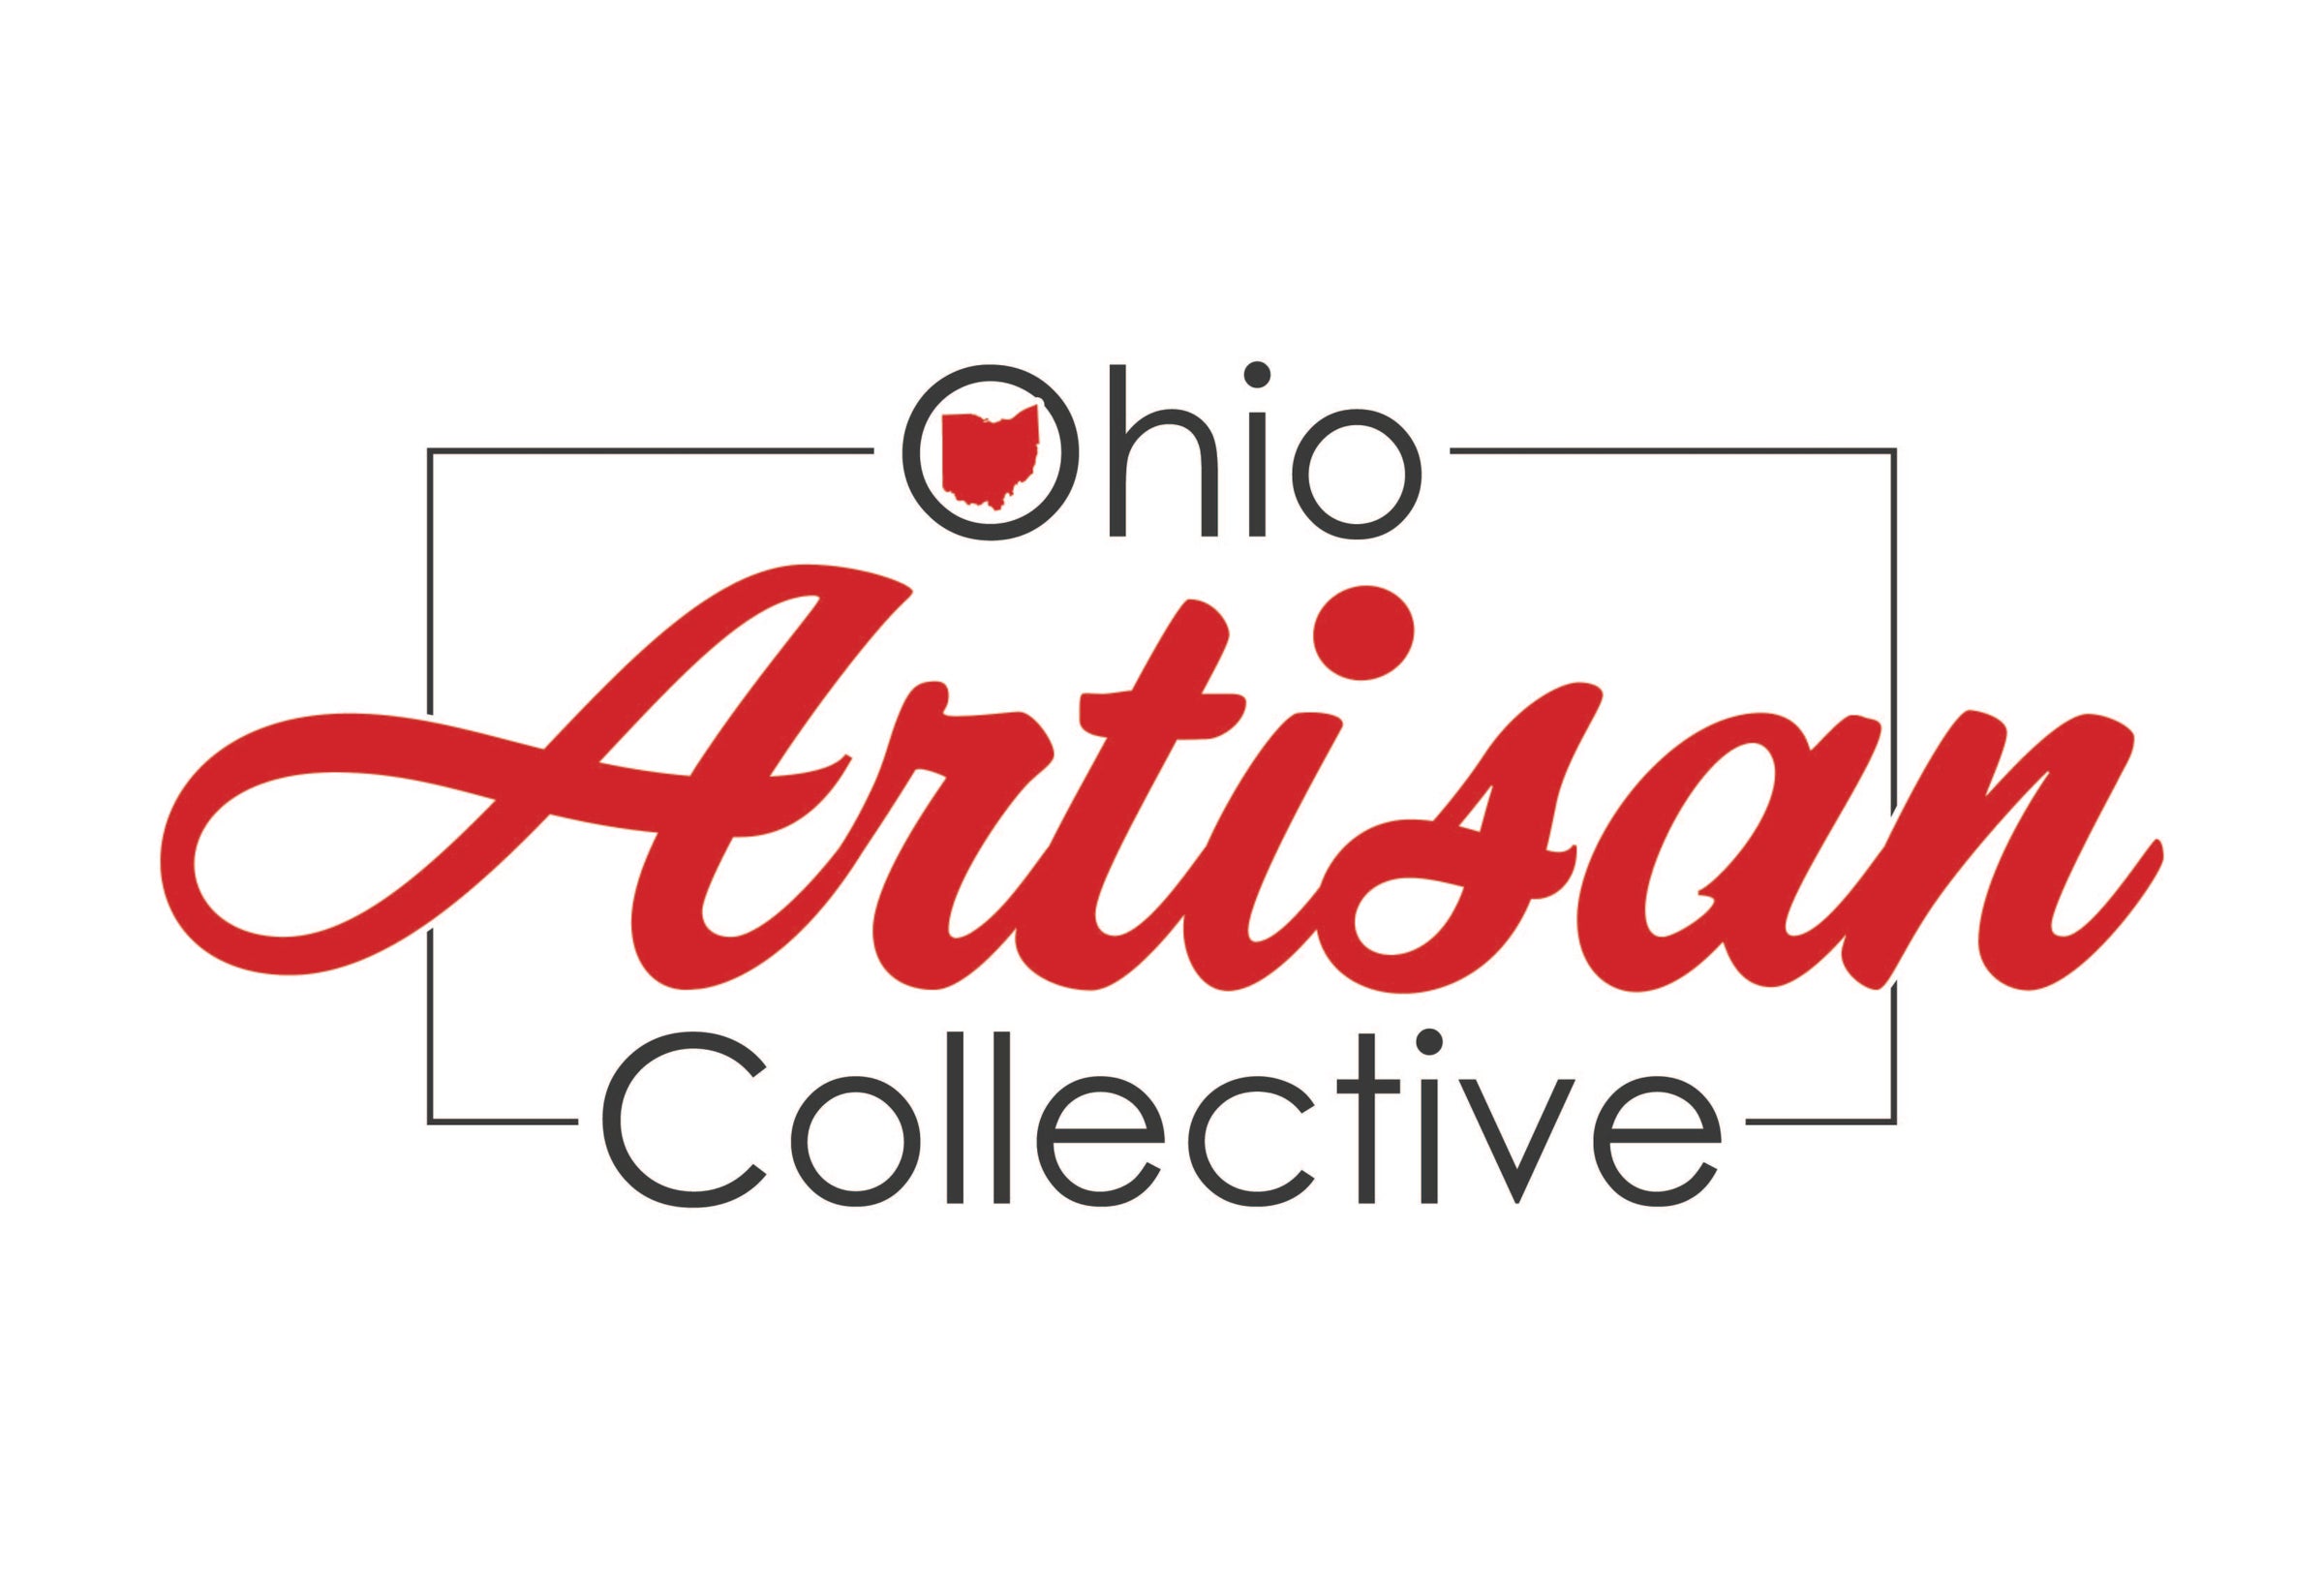 Nature's Oil - Ohio Artisan Collective